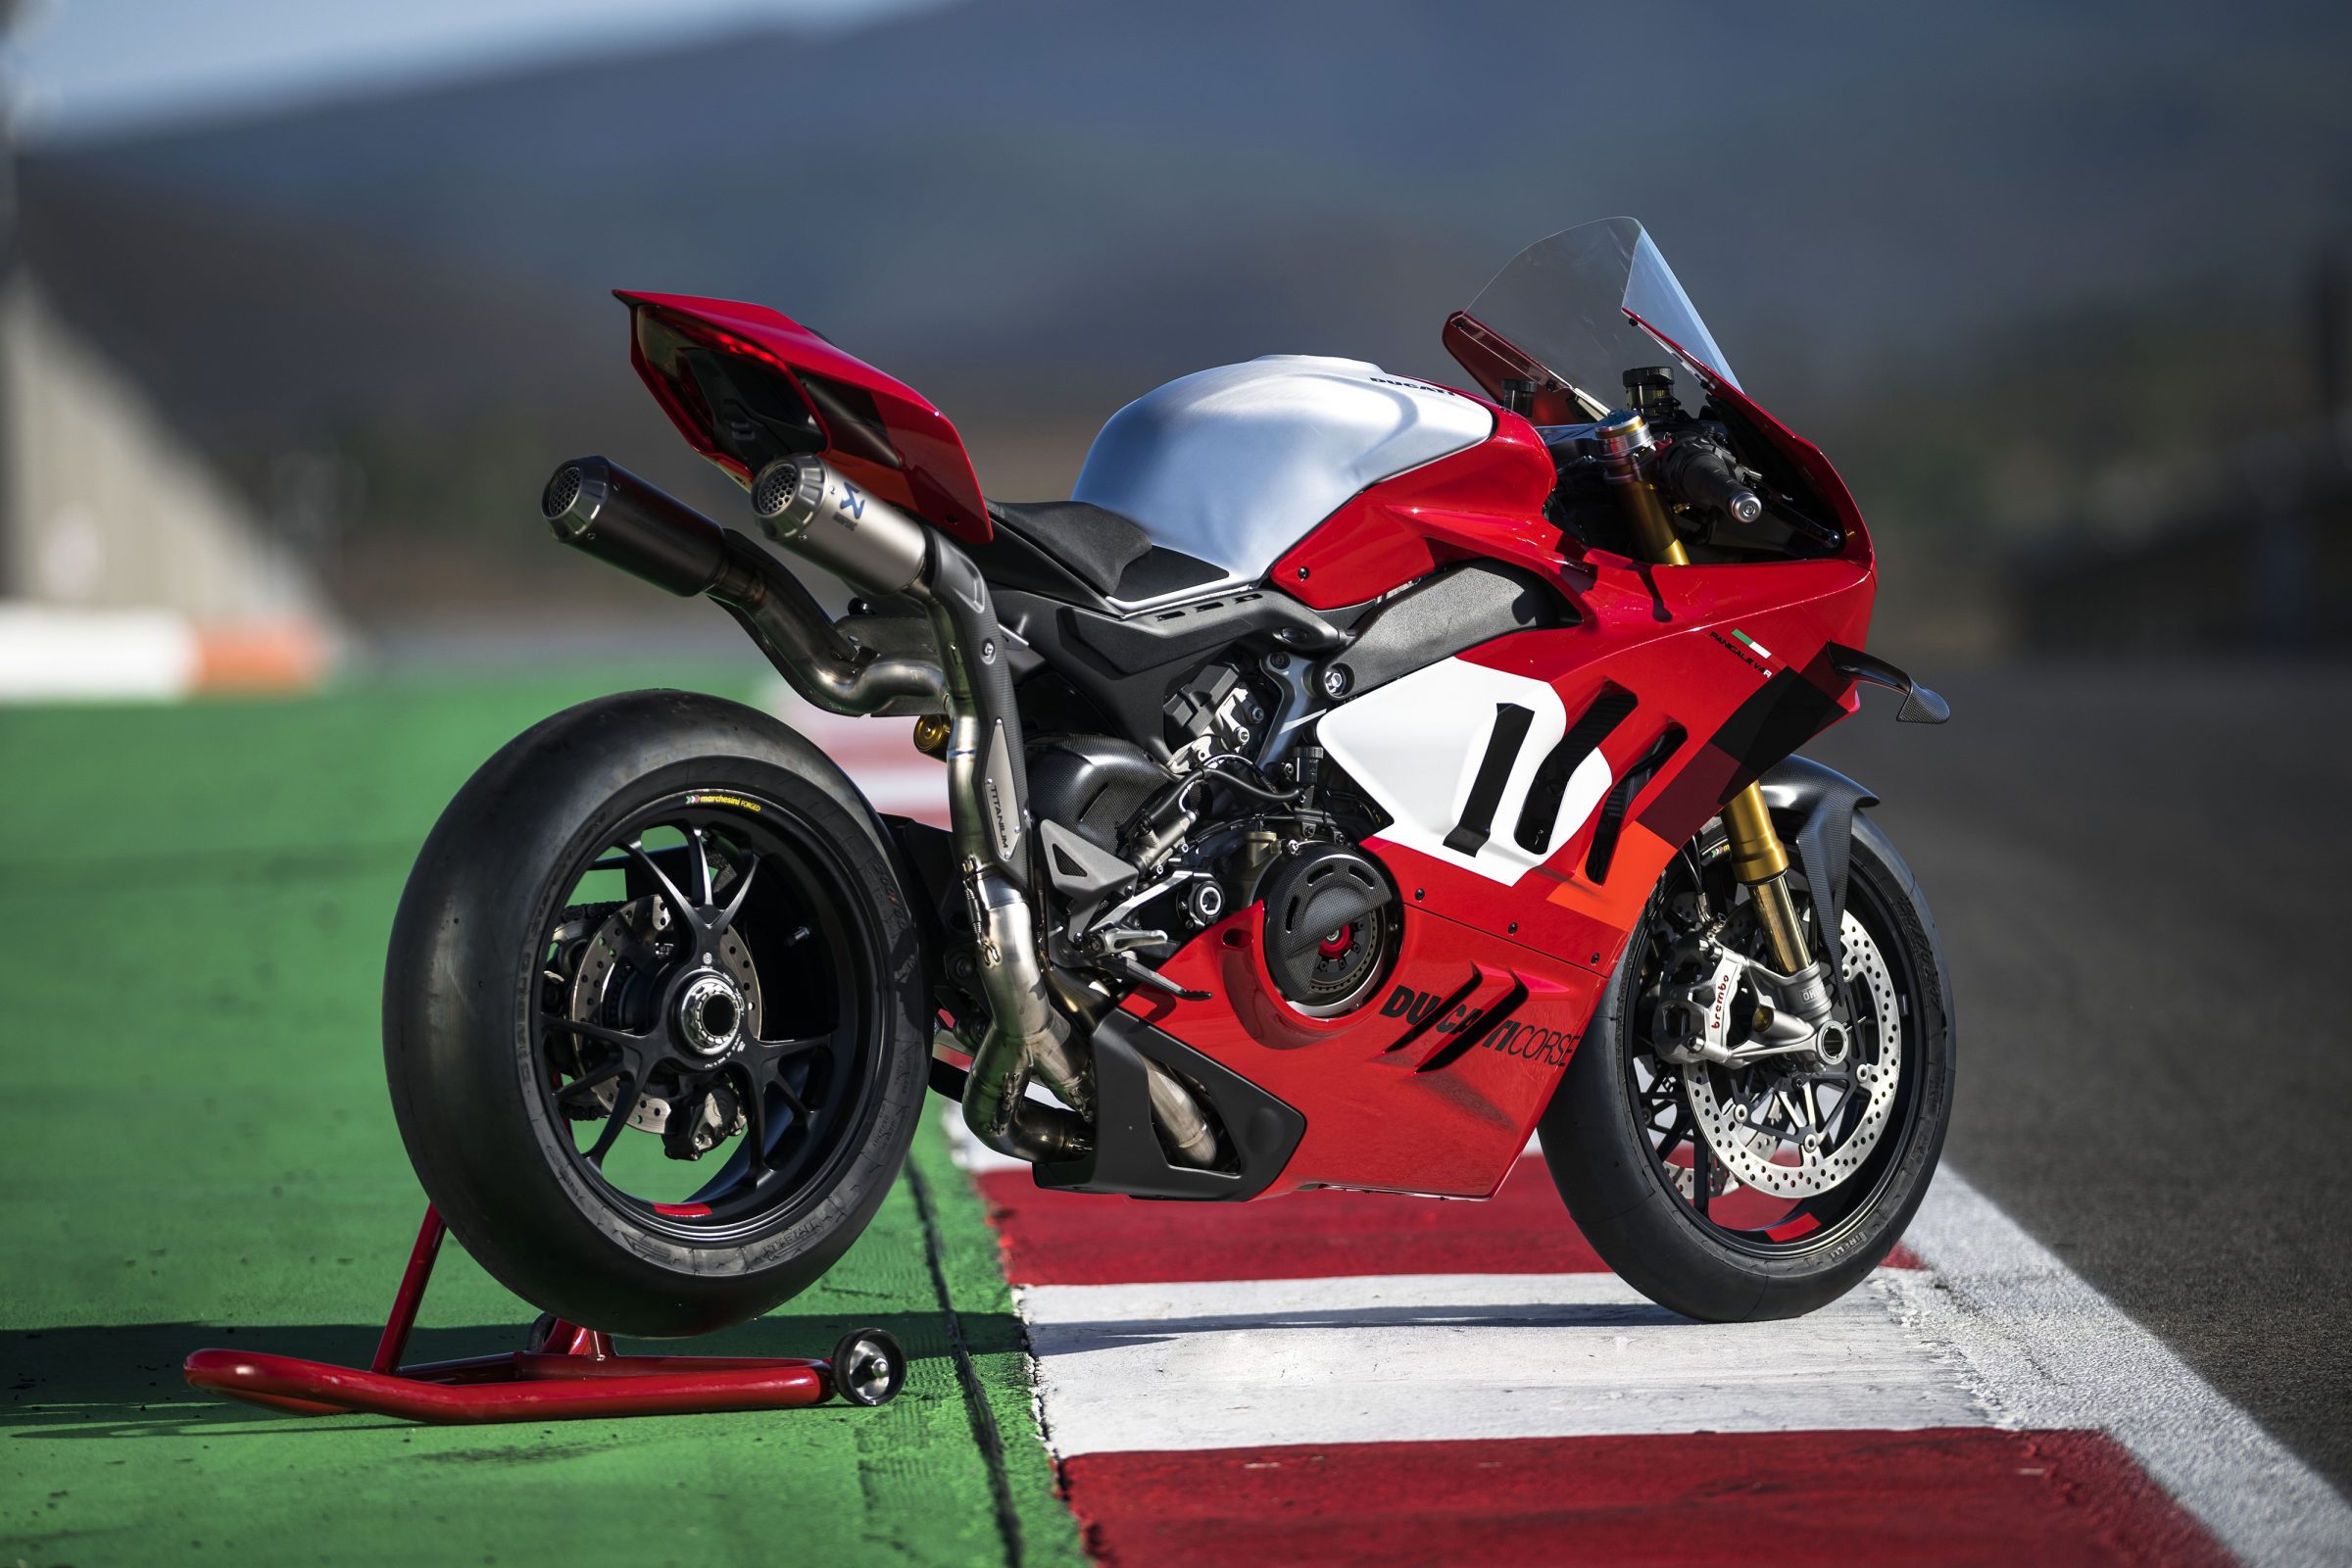 Vídeo: veja e ouça a nova Ducati elétrica da MotoGP (MotoE